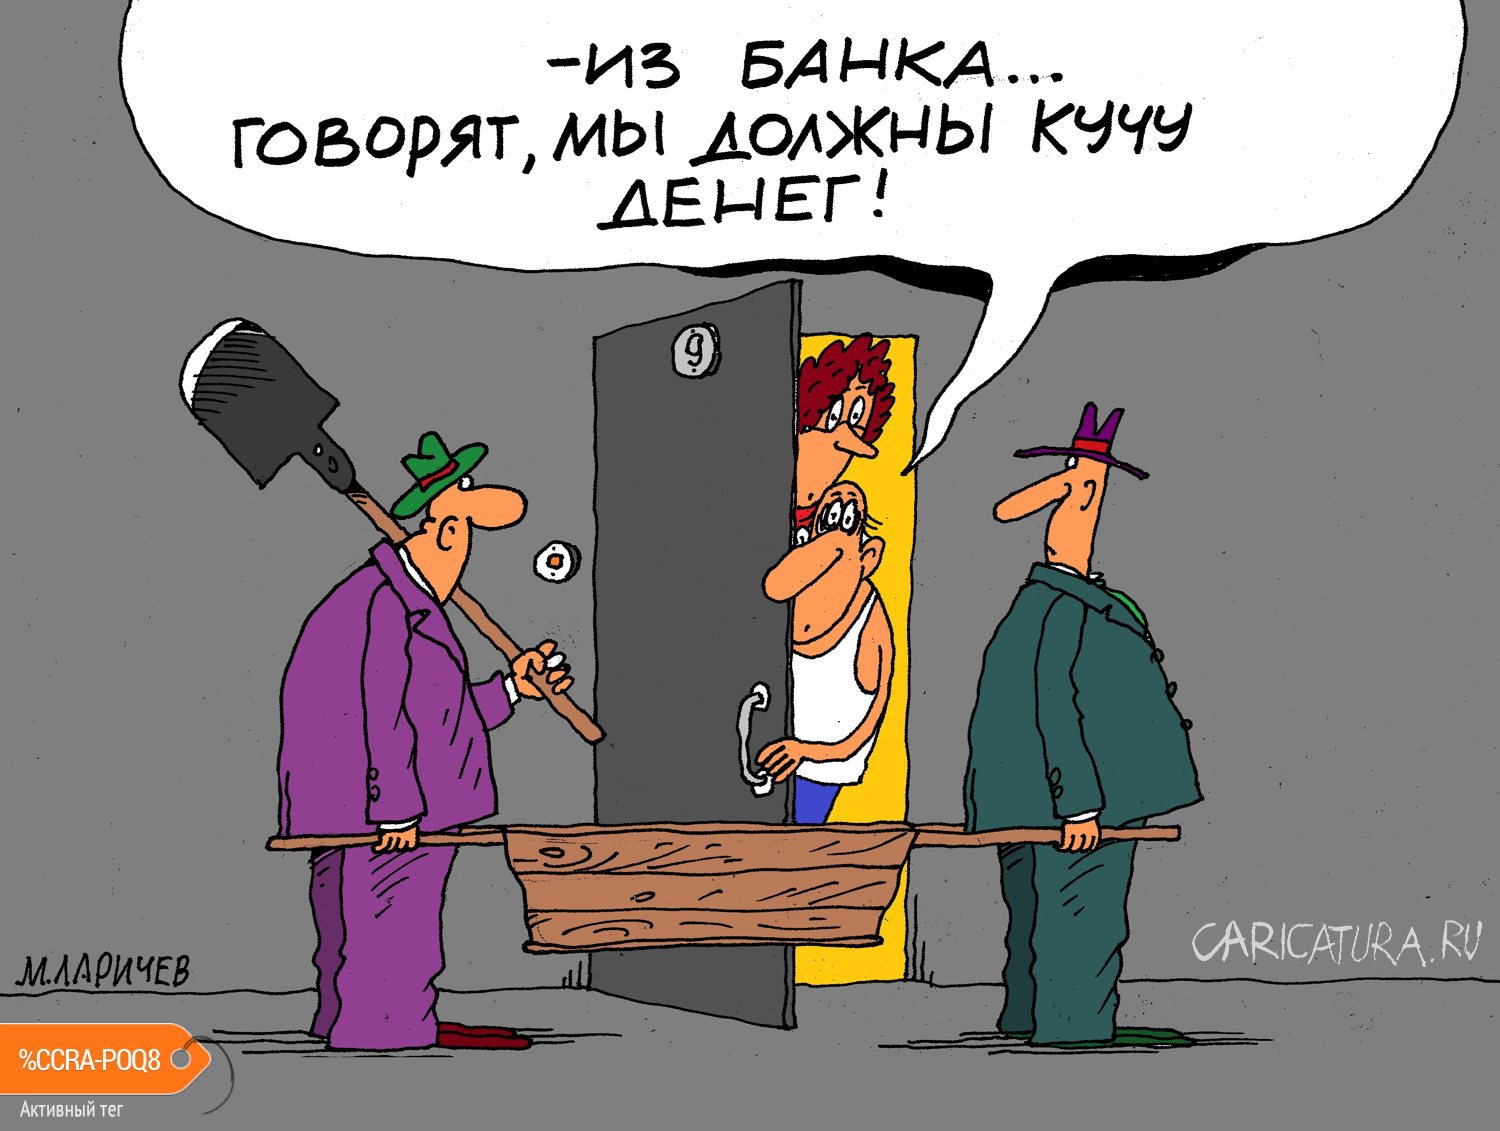 Карикатура "Куча", Михаил Ларичев